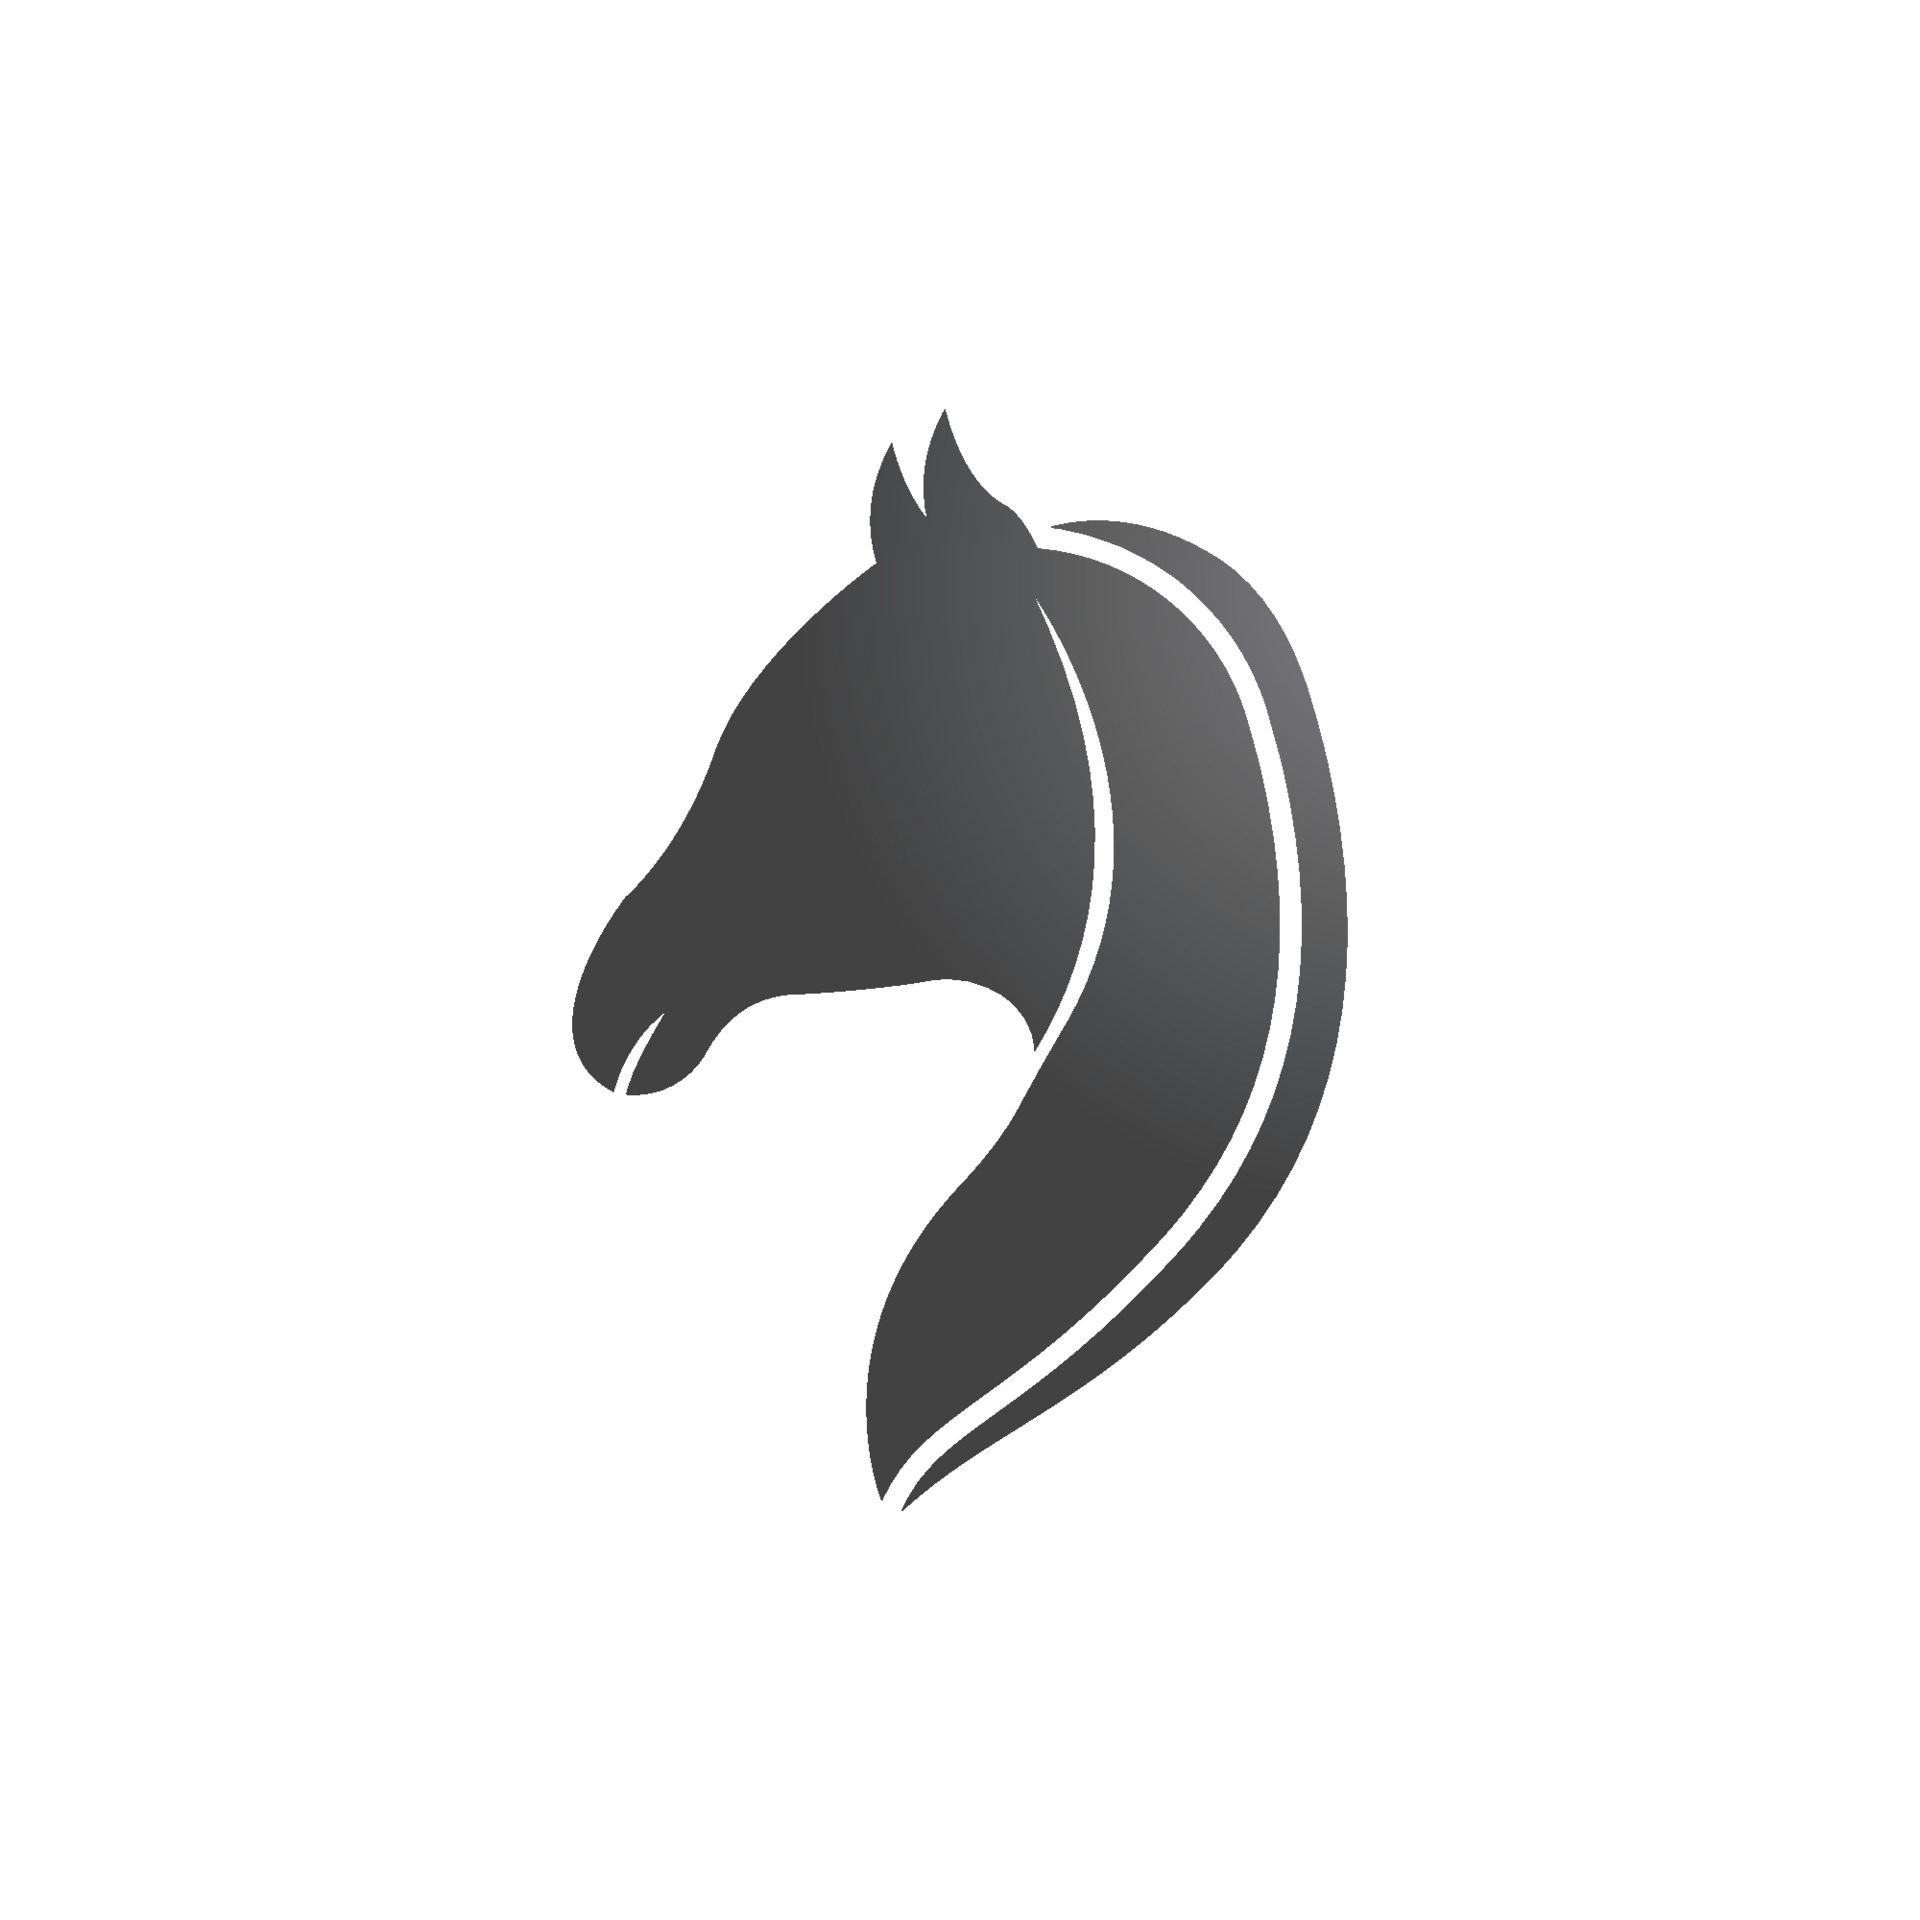 design de modelo de ícone de logotipo de cabeça de cavalo 14695973 Vetor no  Vecteezy